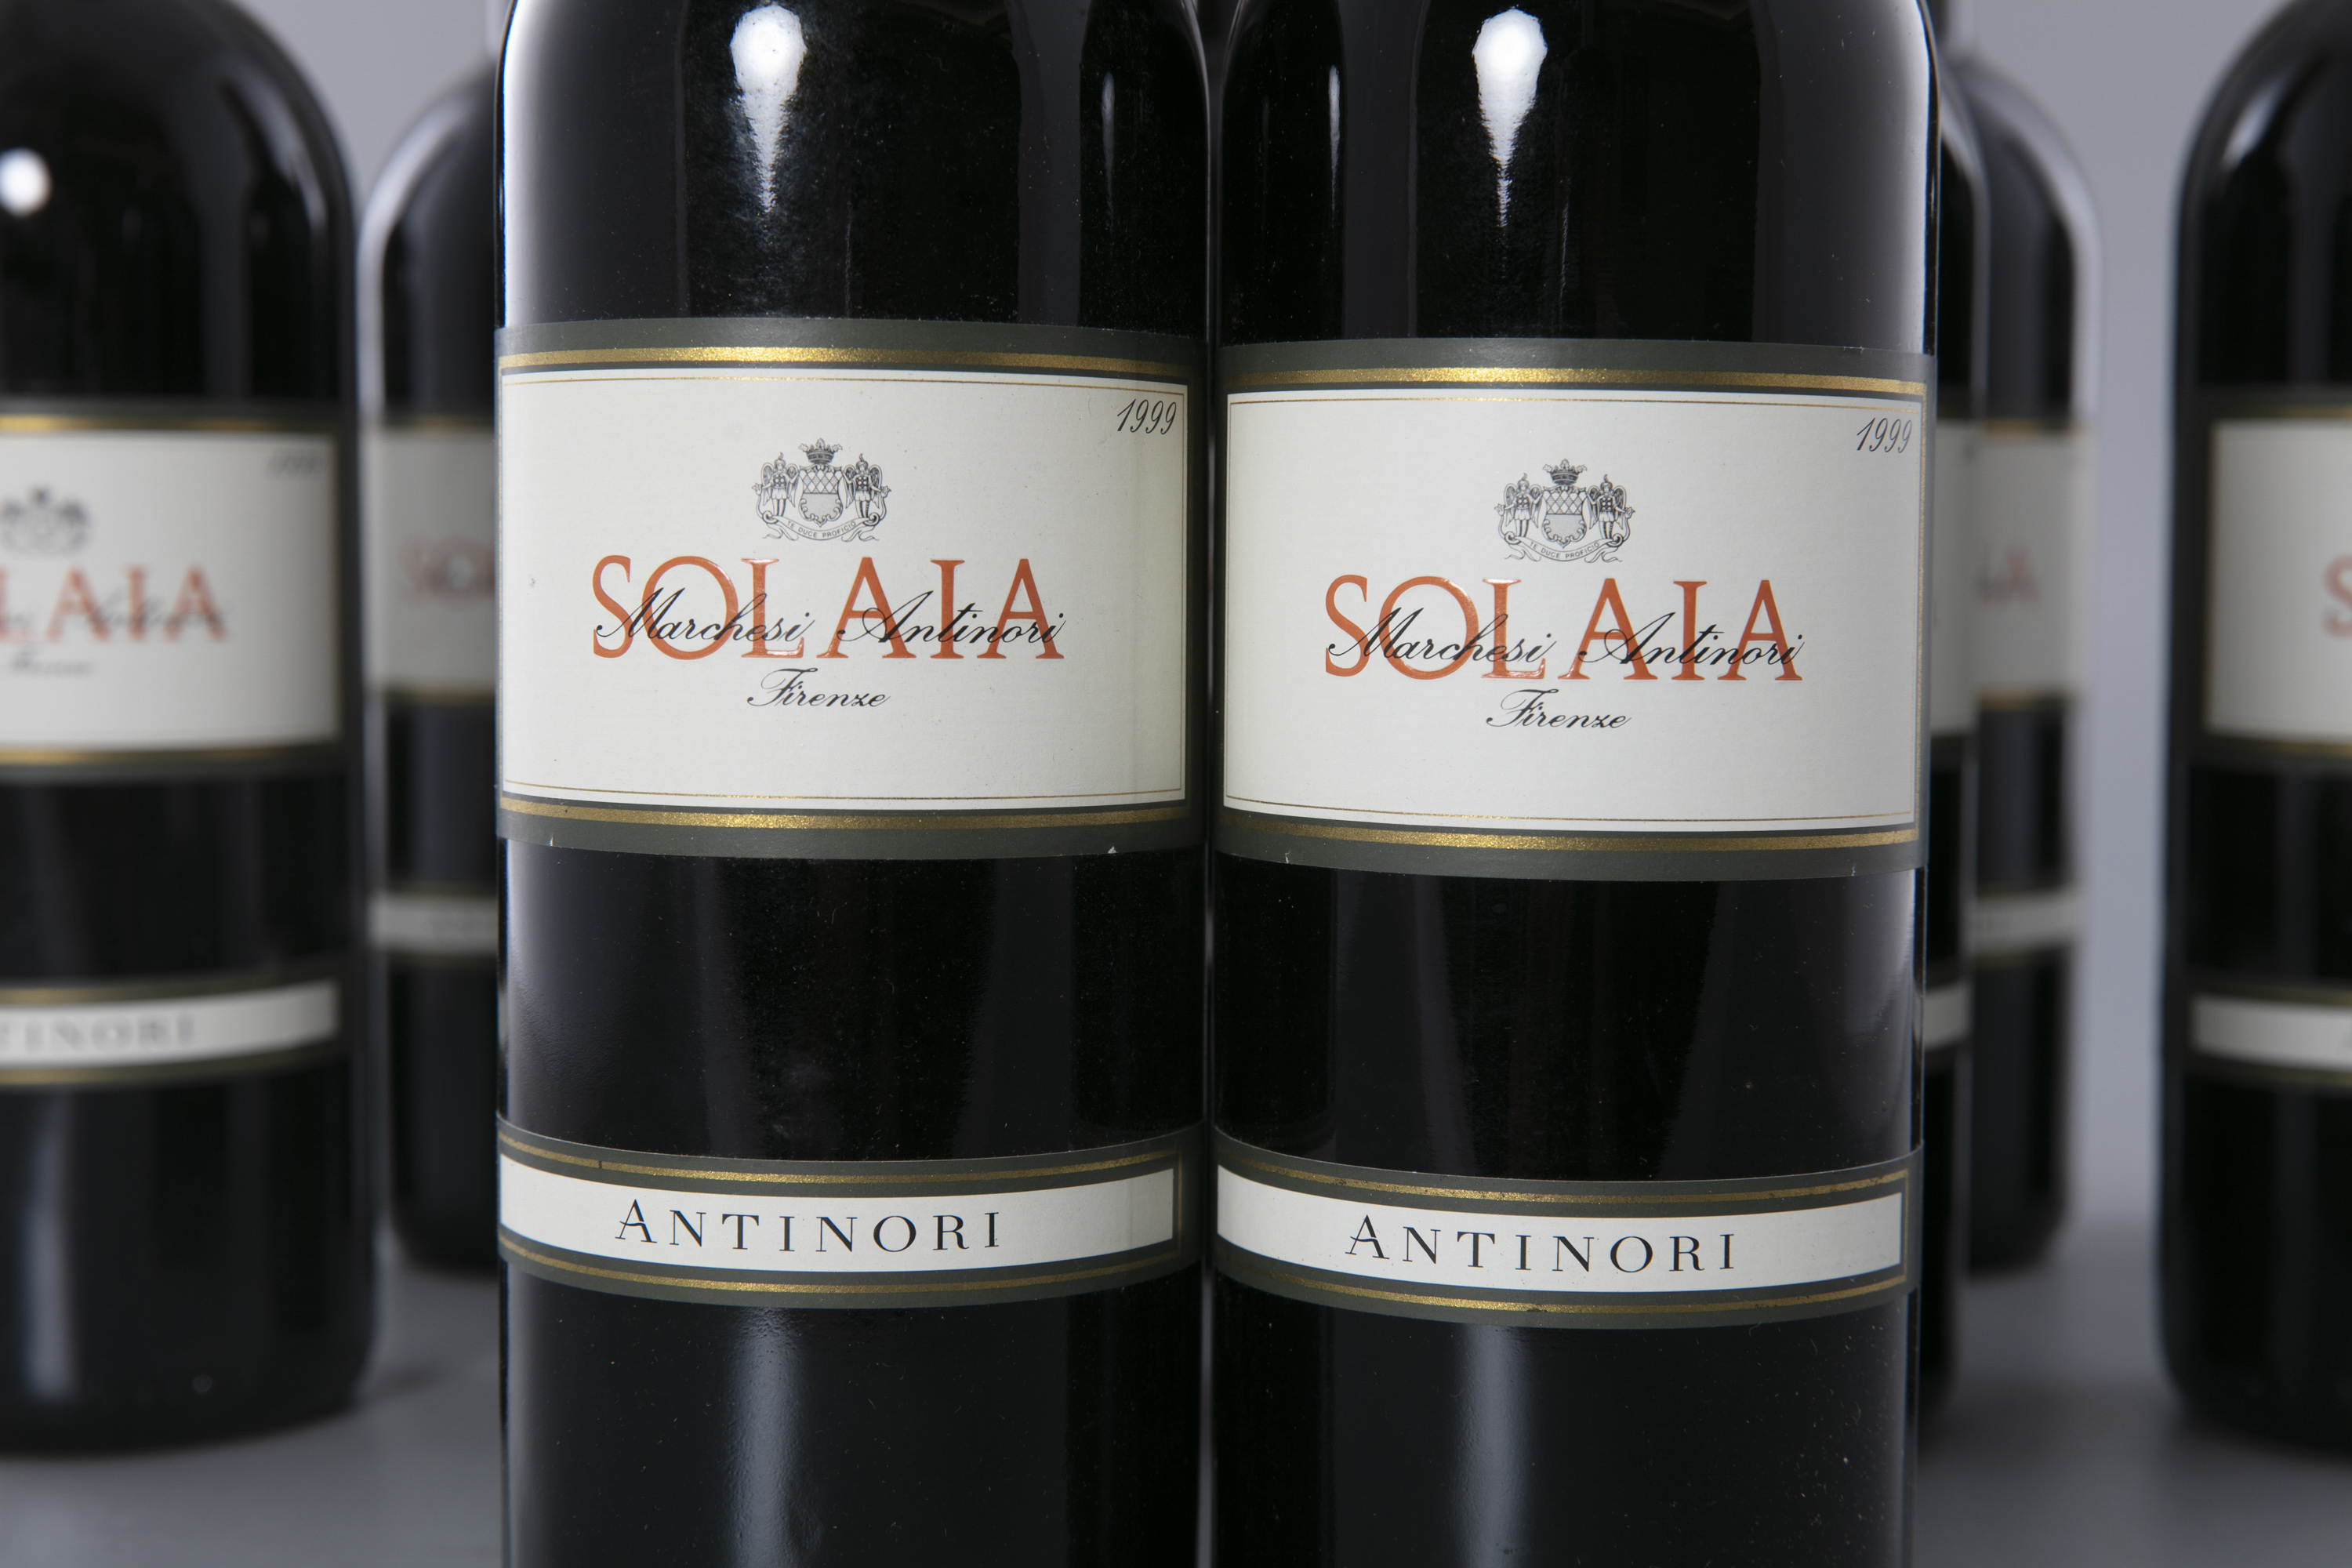 Antinori Solaia Toscana 1999 11 bottles (two cases) - Image 2 of 3